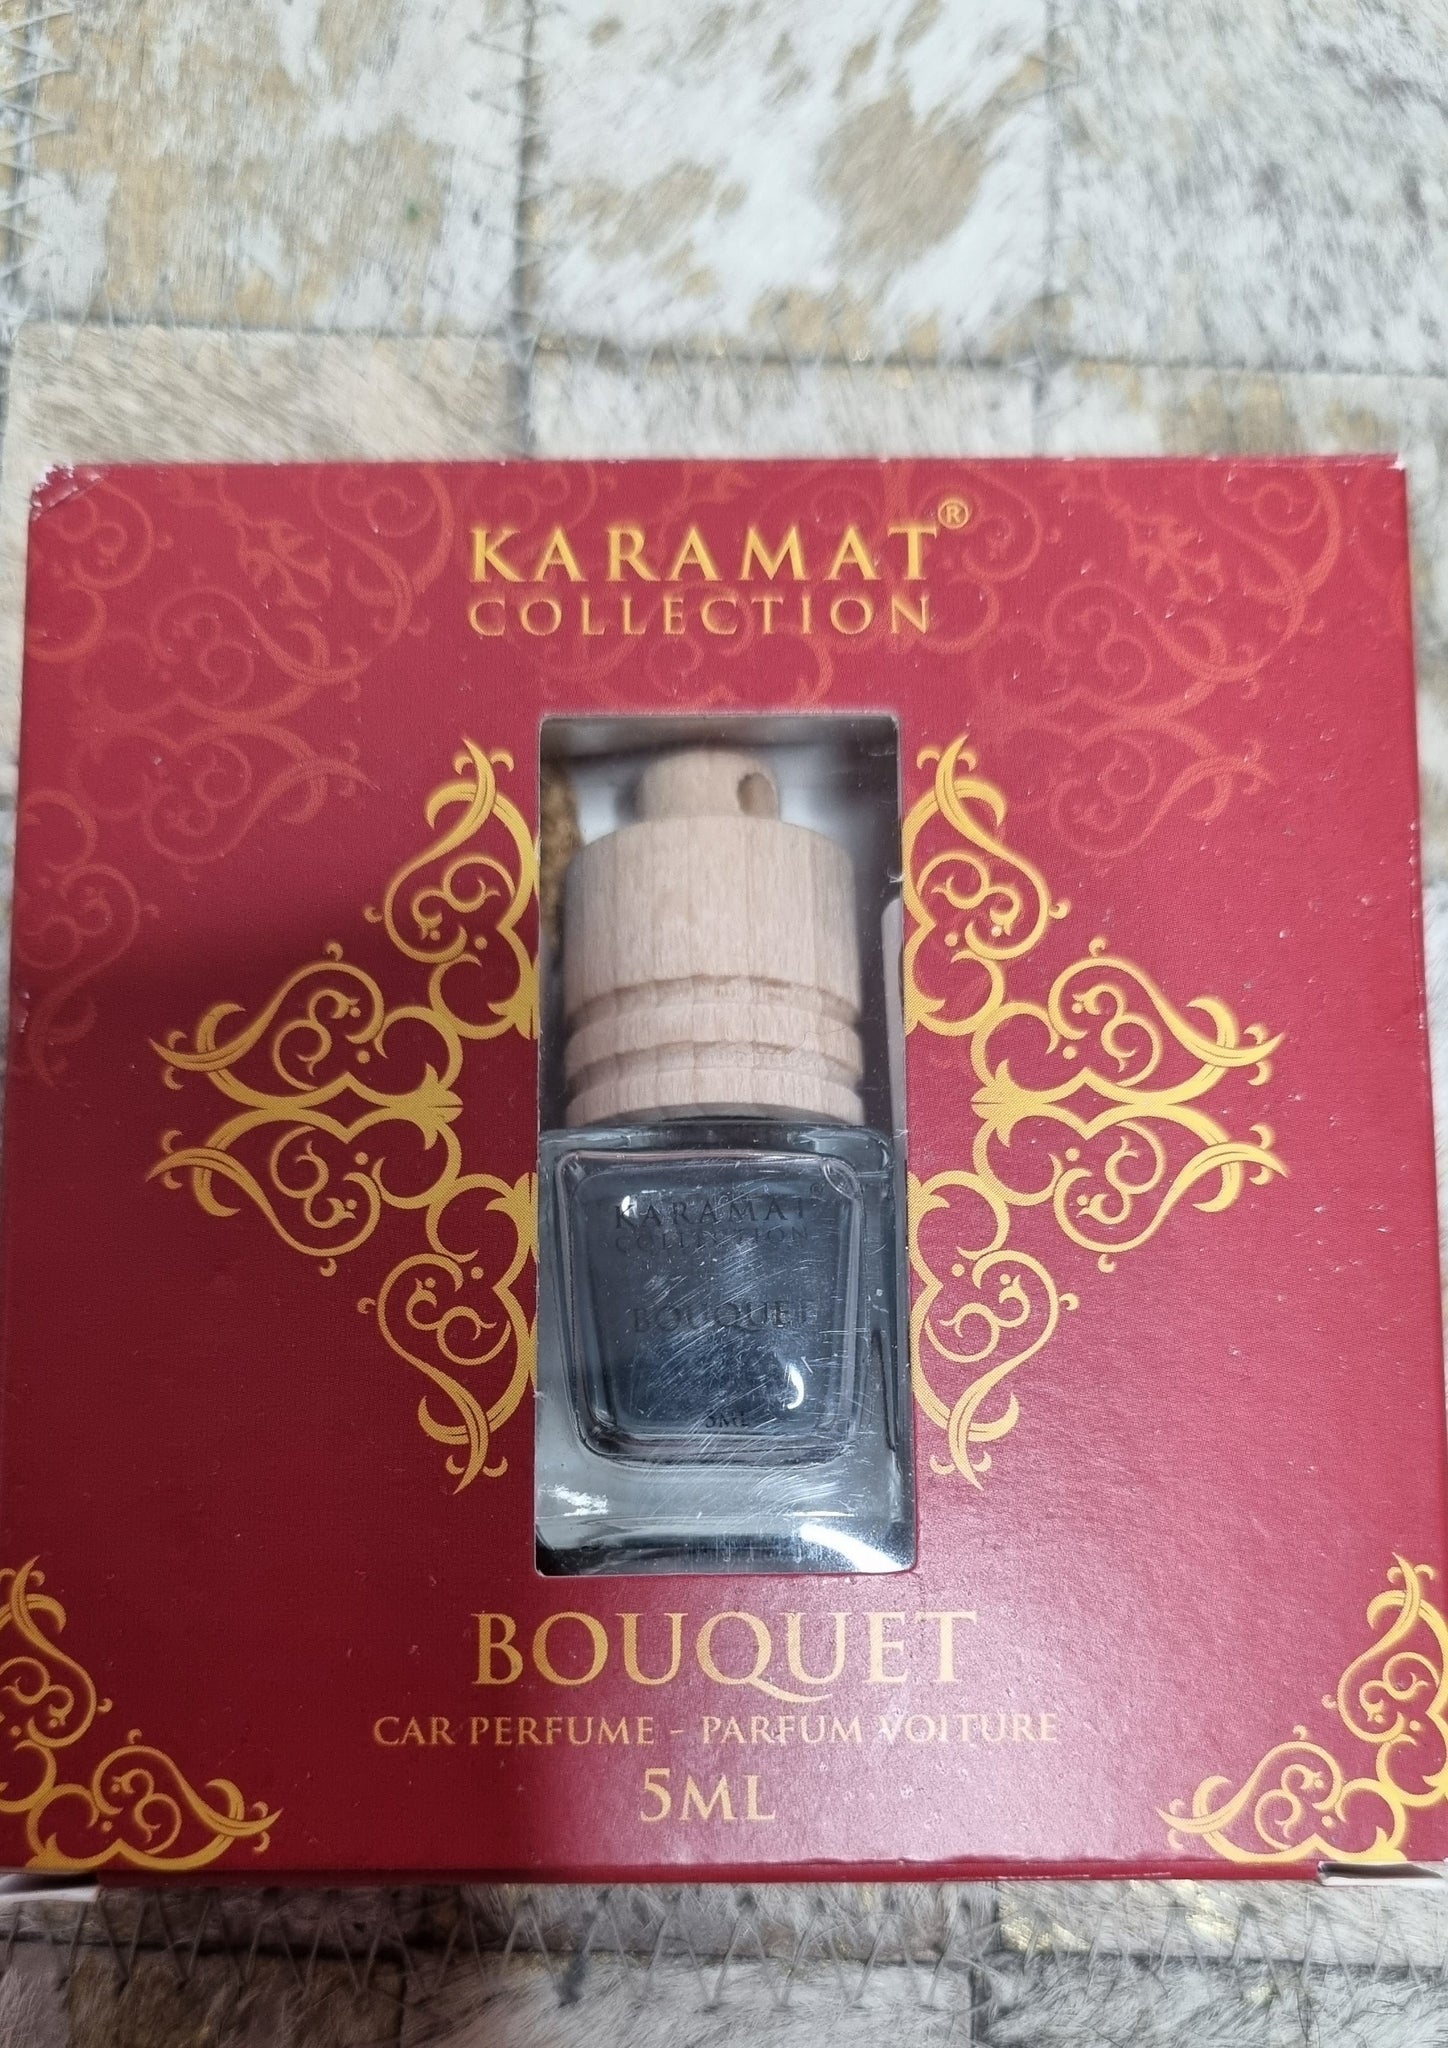 Parfum Voiture Musc Bergamot 5ml – Karamat Collection - Shop Ton